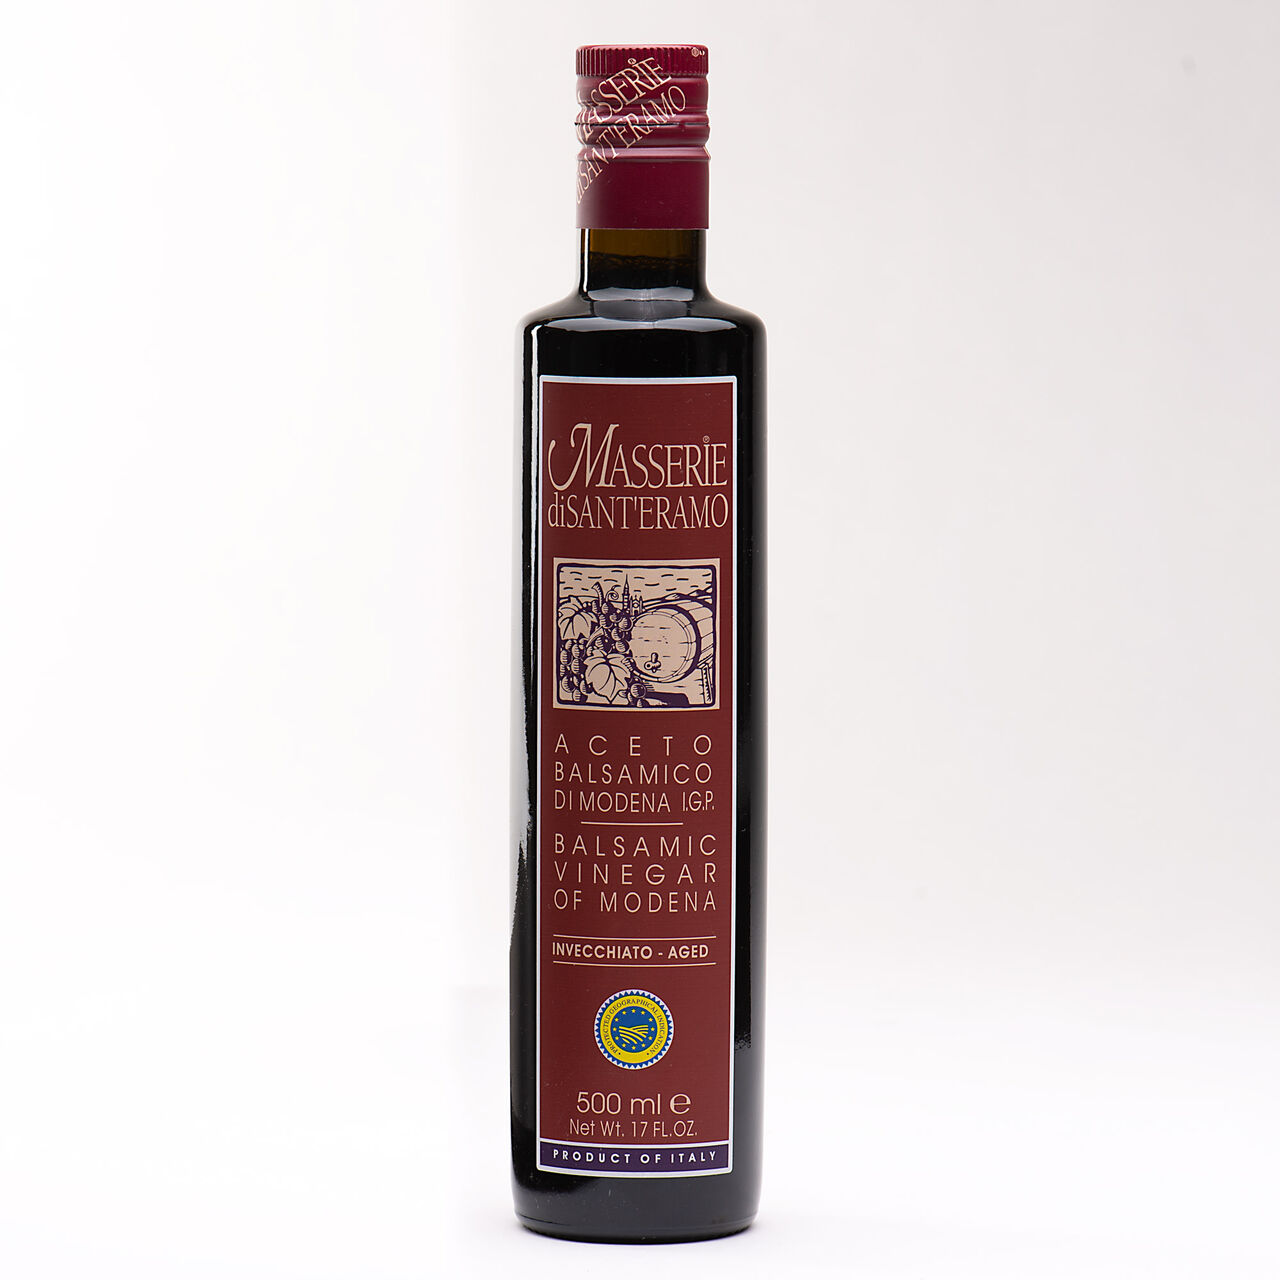 Masserie di Sant'eramo Balsamic Vinegar of Modena - 17oz, , large image number 0